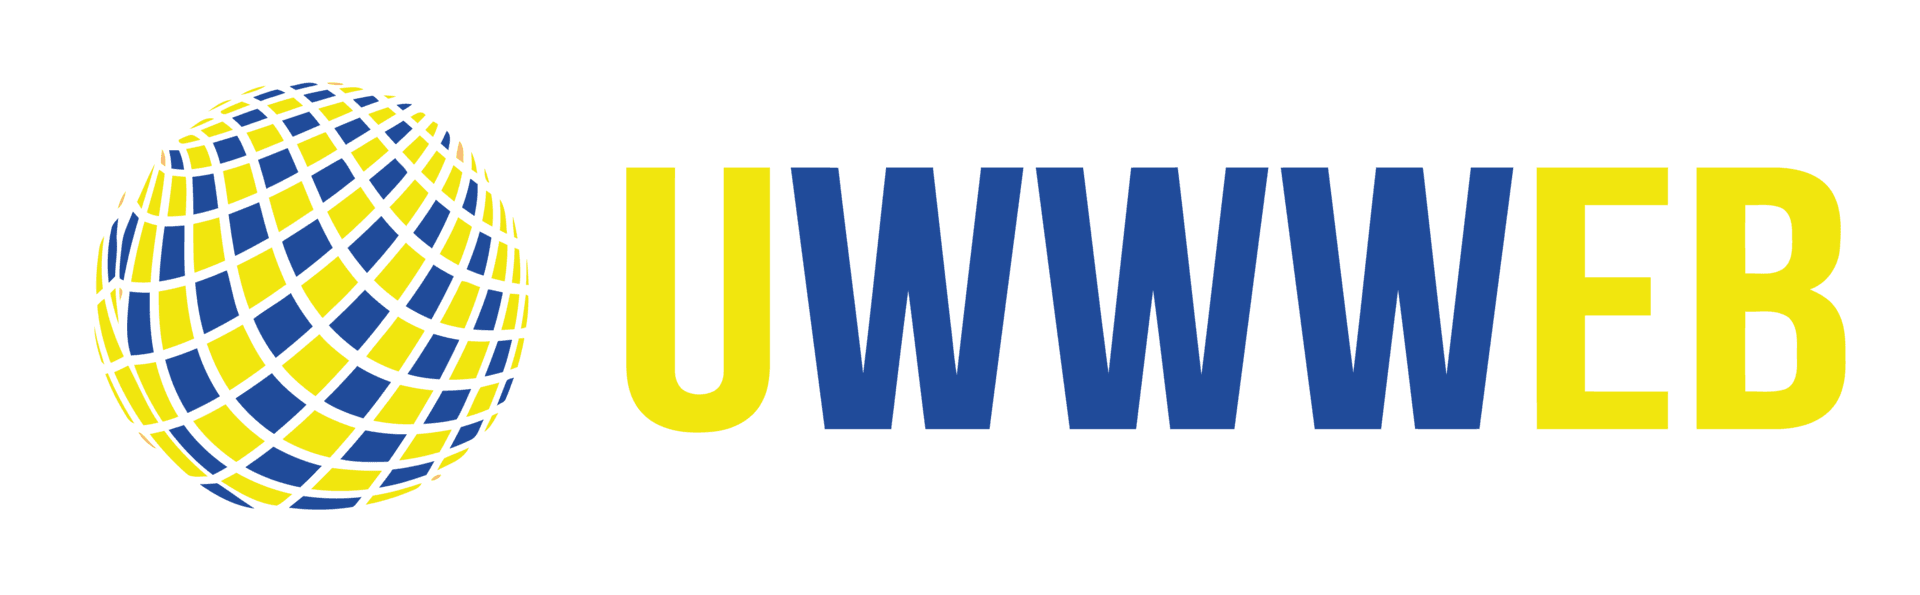 UWW Logo - Welcome to uwwweb